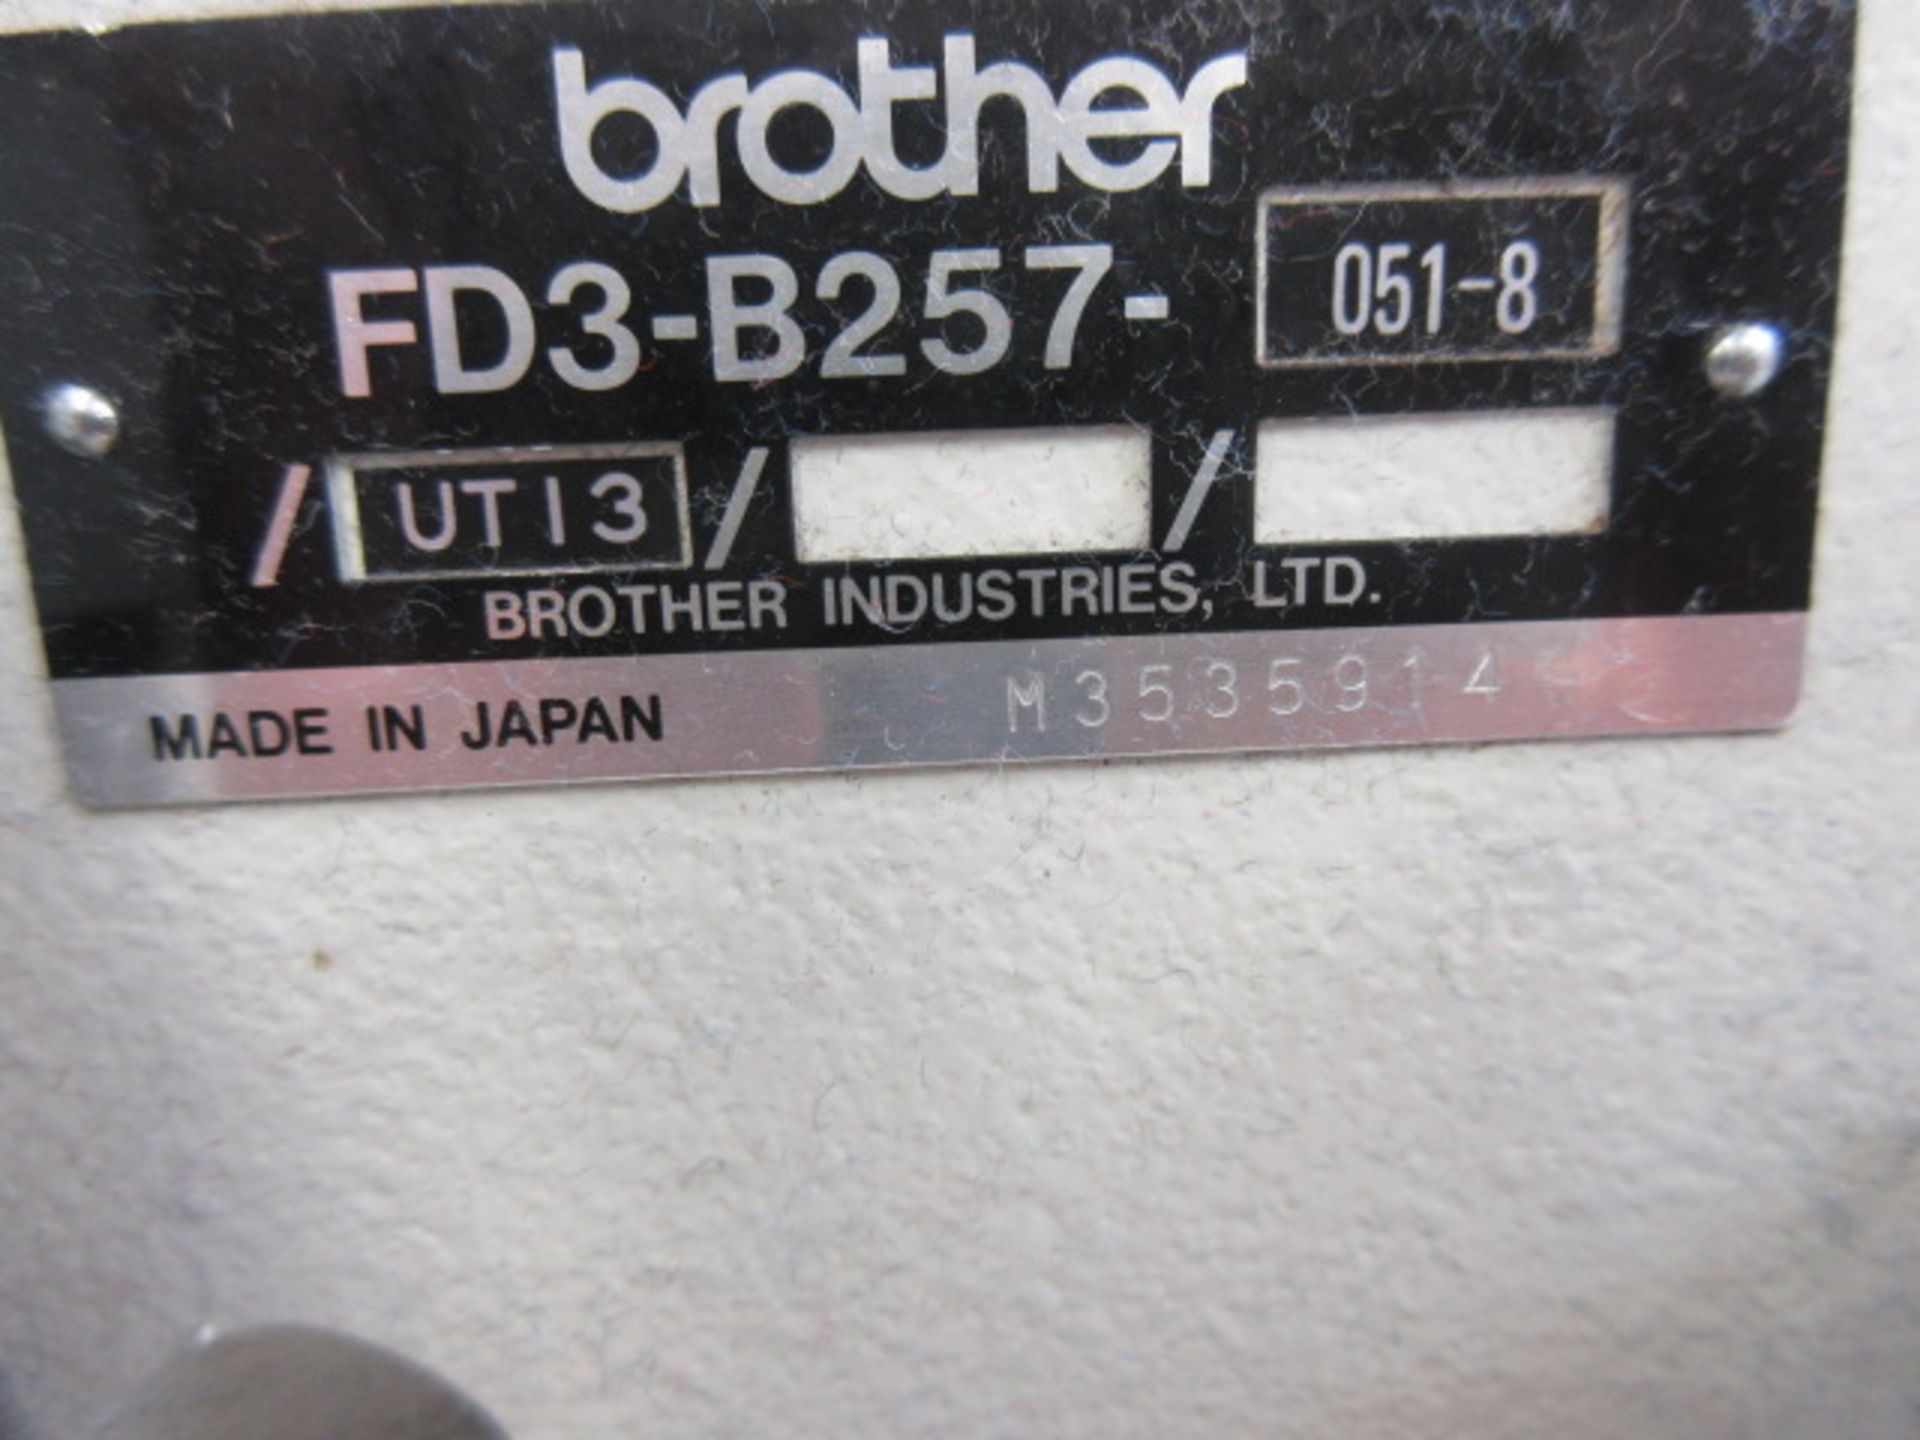 Brother FD3-B257-051-8 overlocker sewing machine (2012) - Image 4 of 4